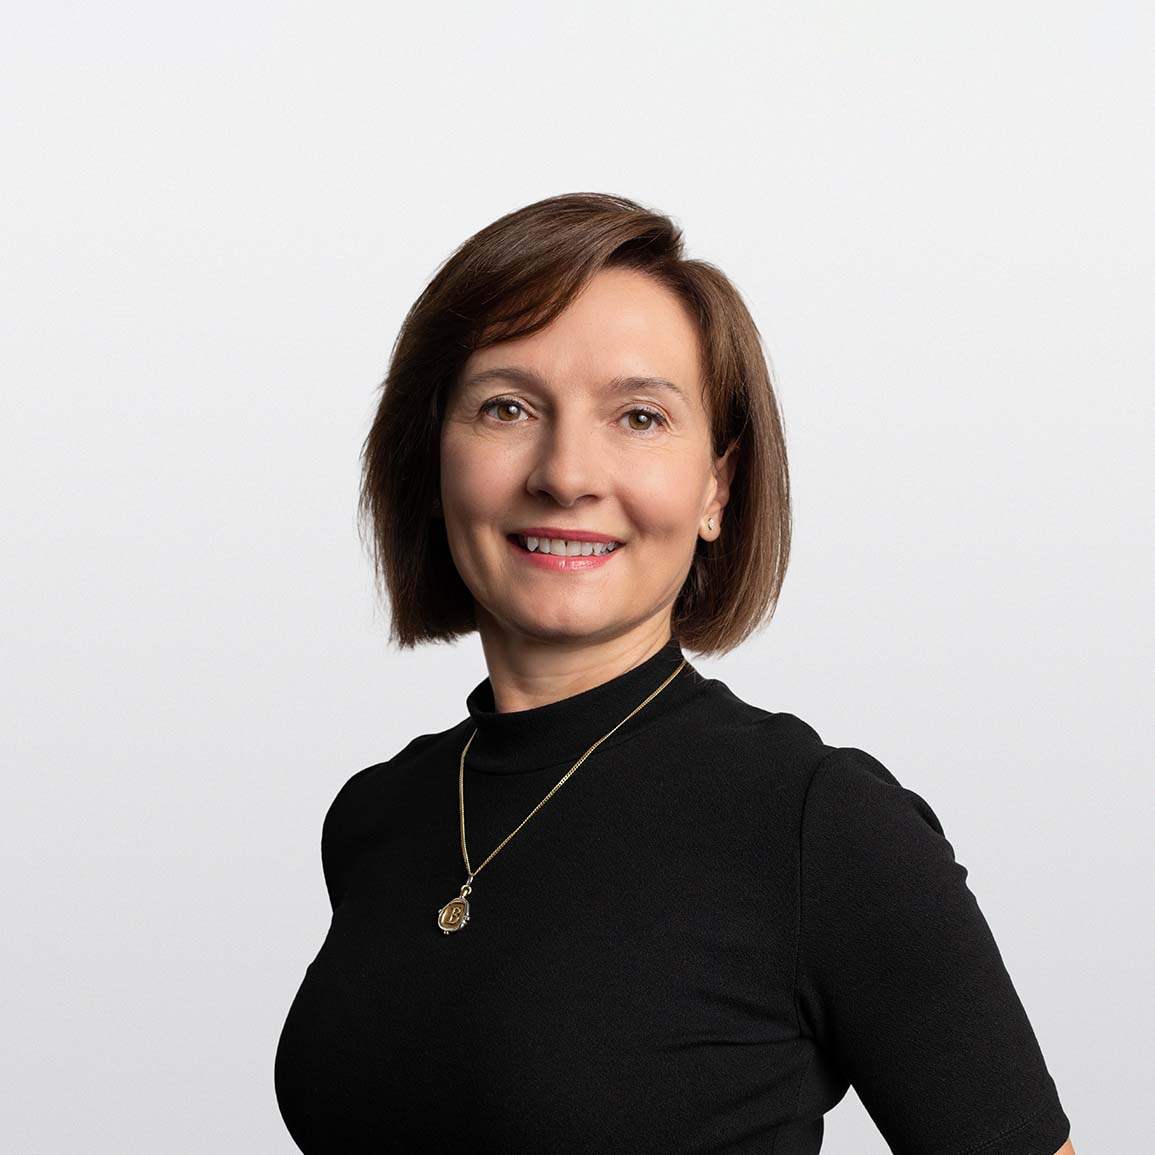 Image of Valentina Sokolov senior private banking advisor on white background